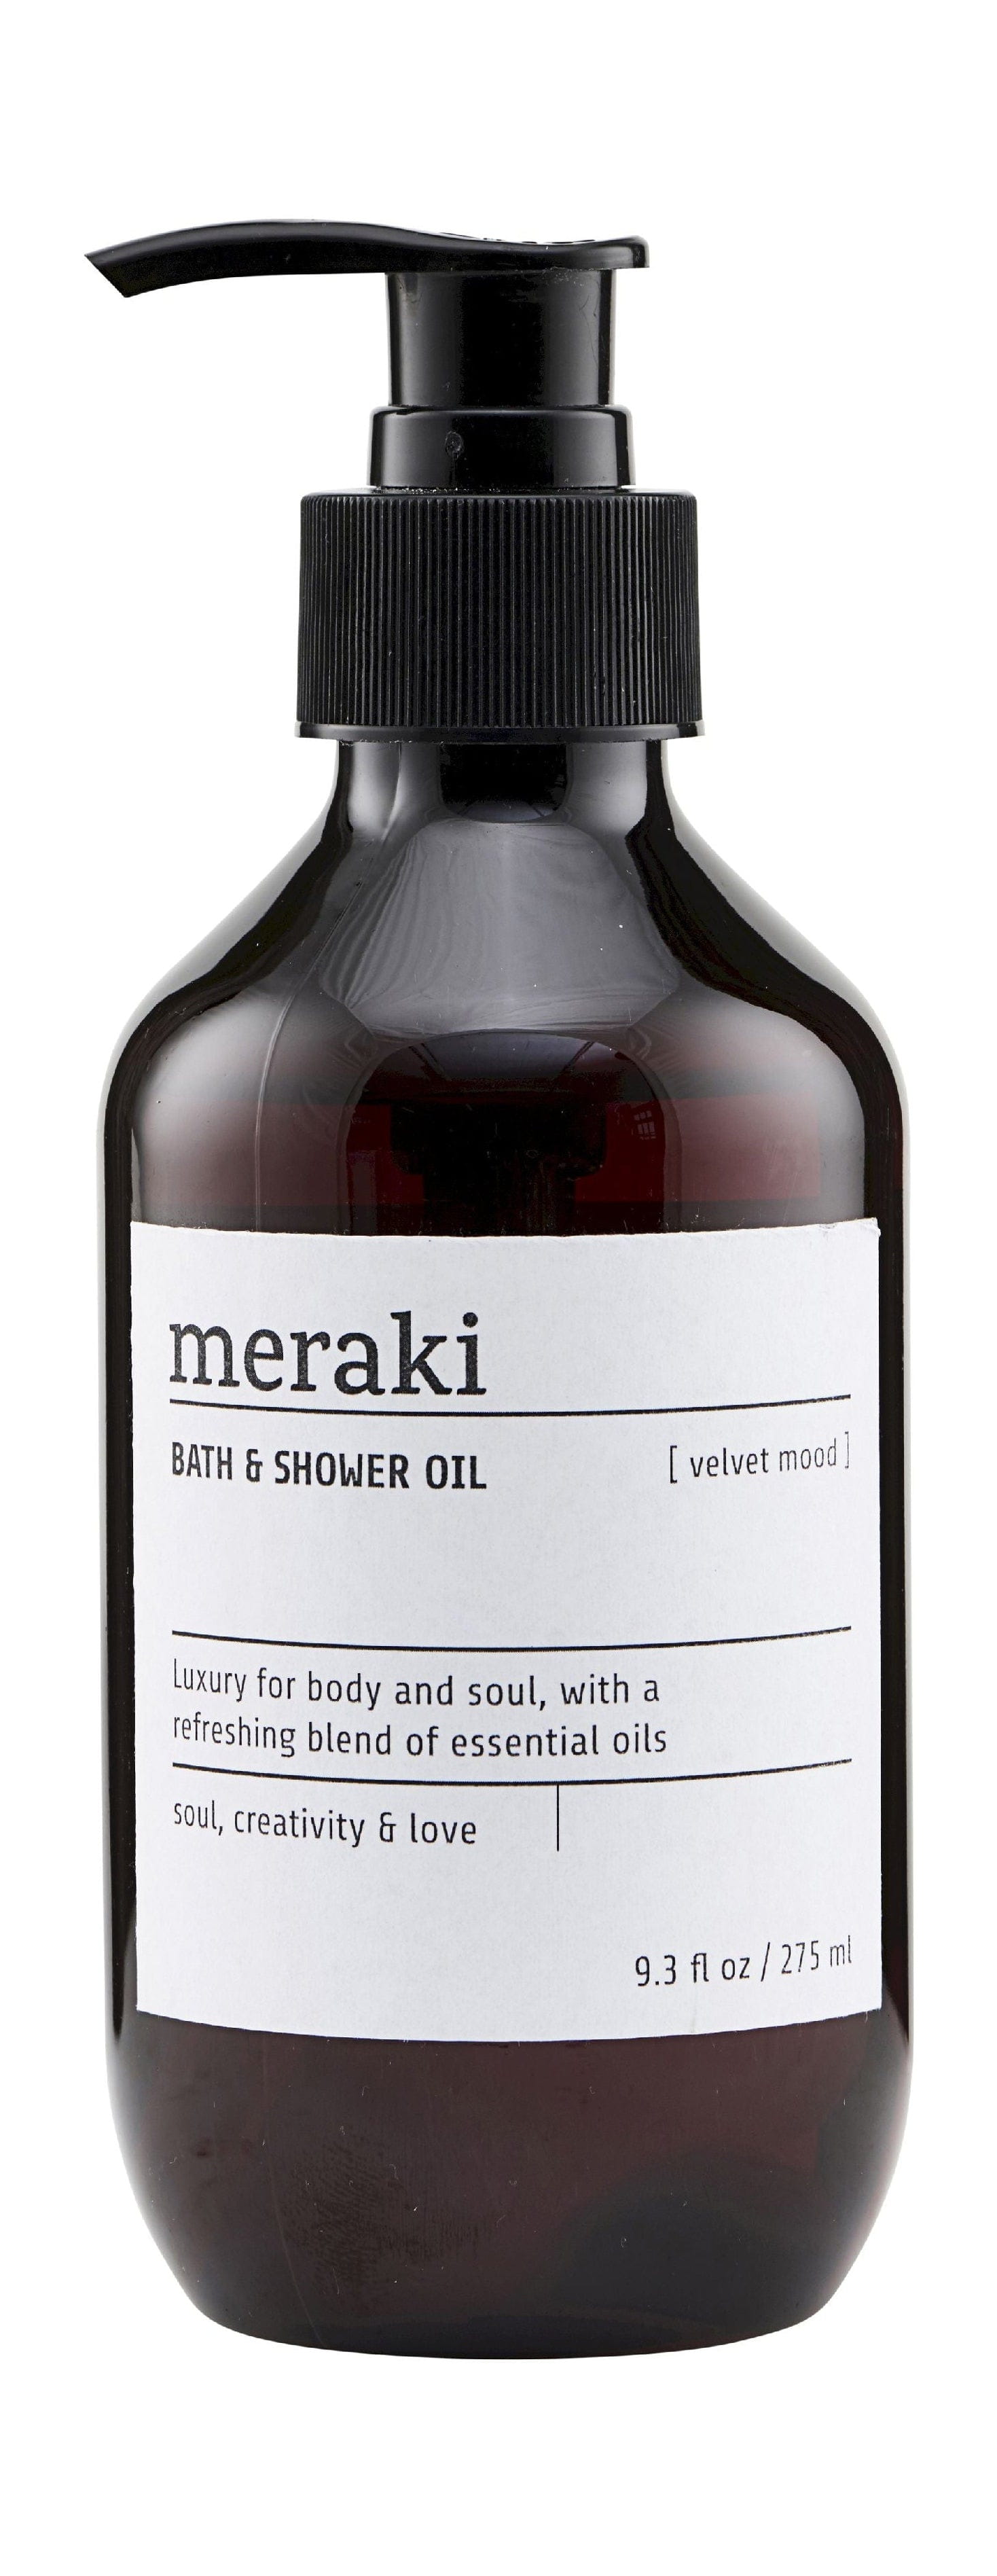 Meraki Bath & Shower Oil 275 ml, sammet humör